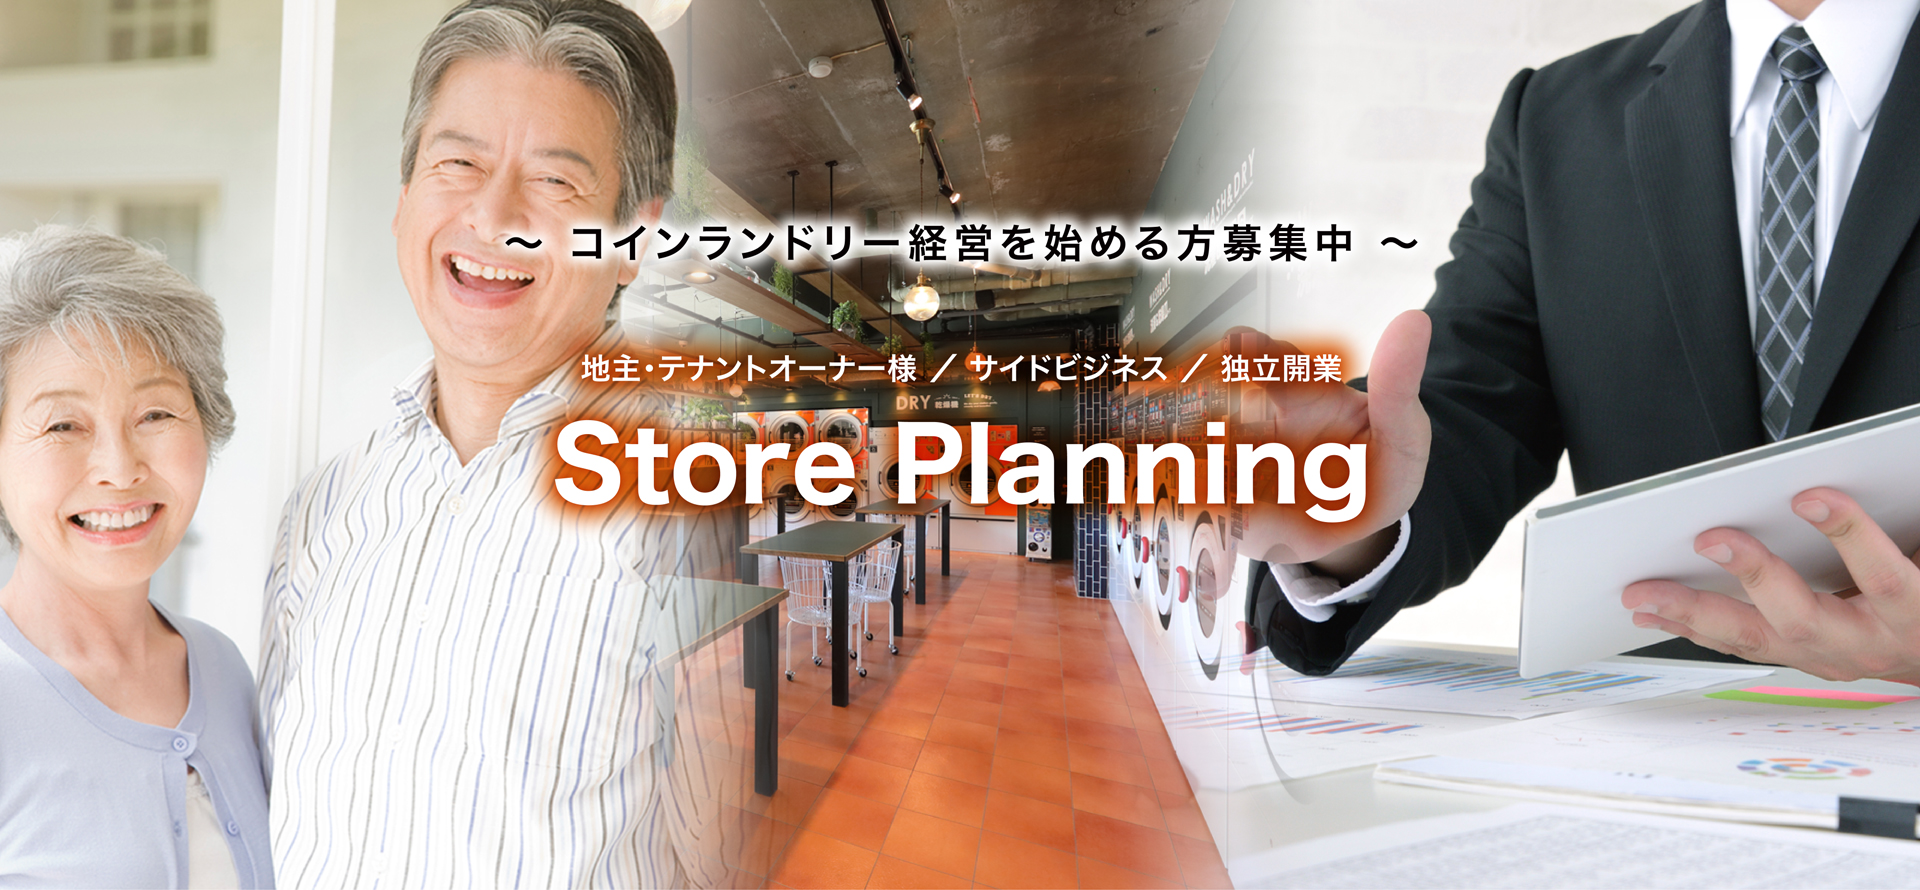 Store Planning